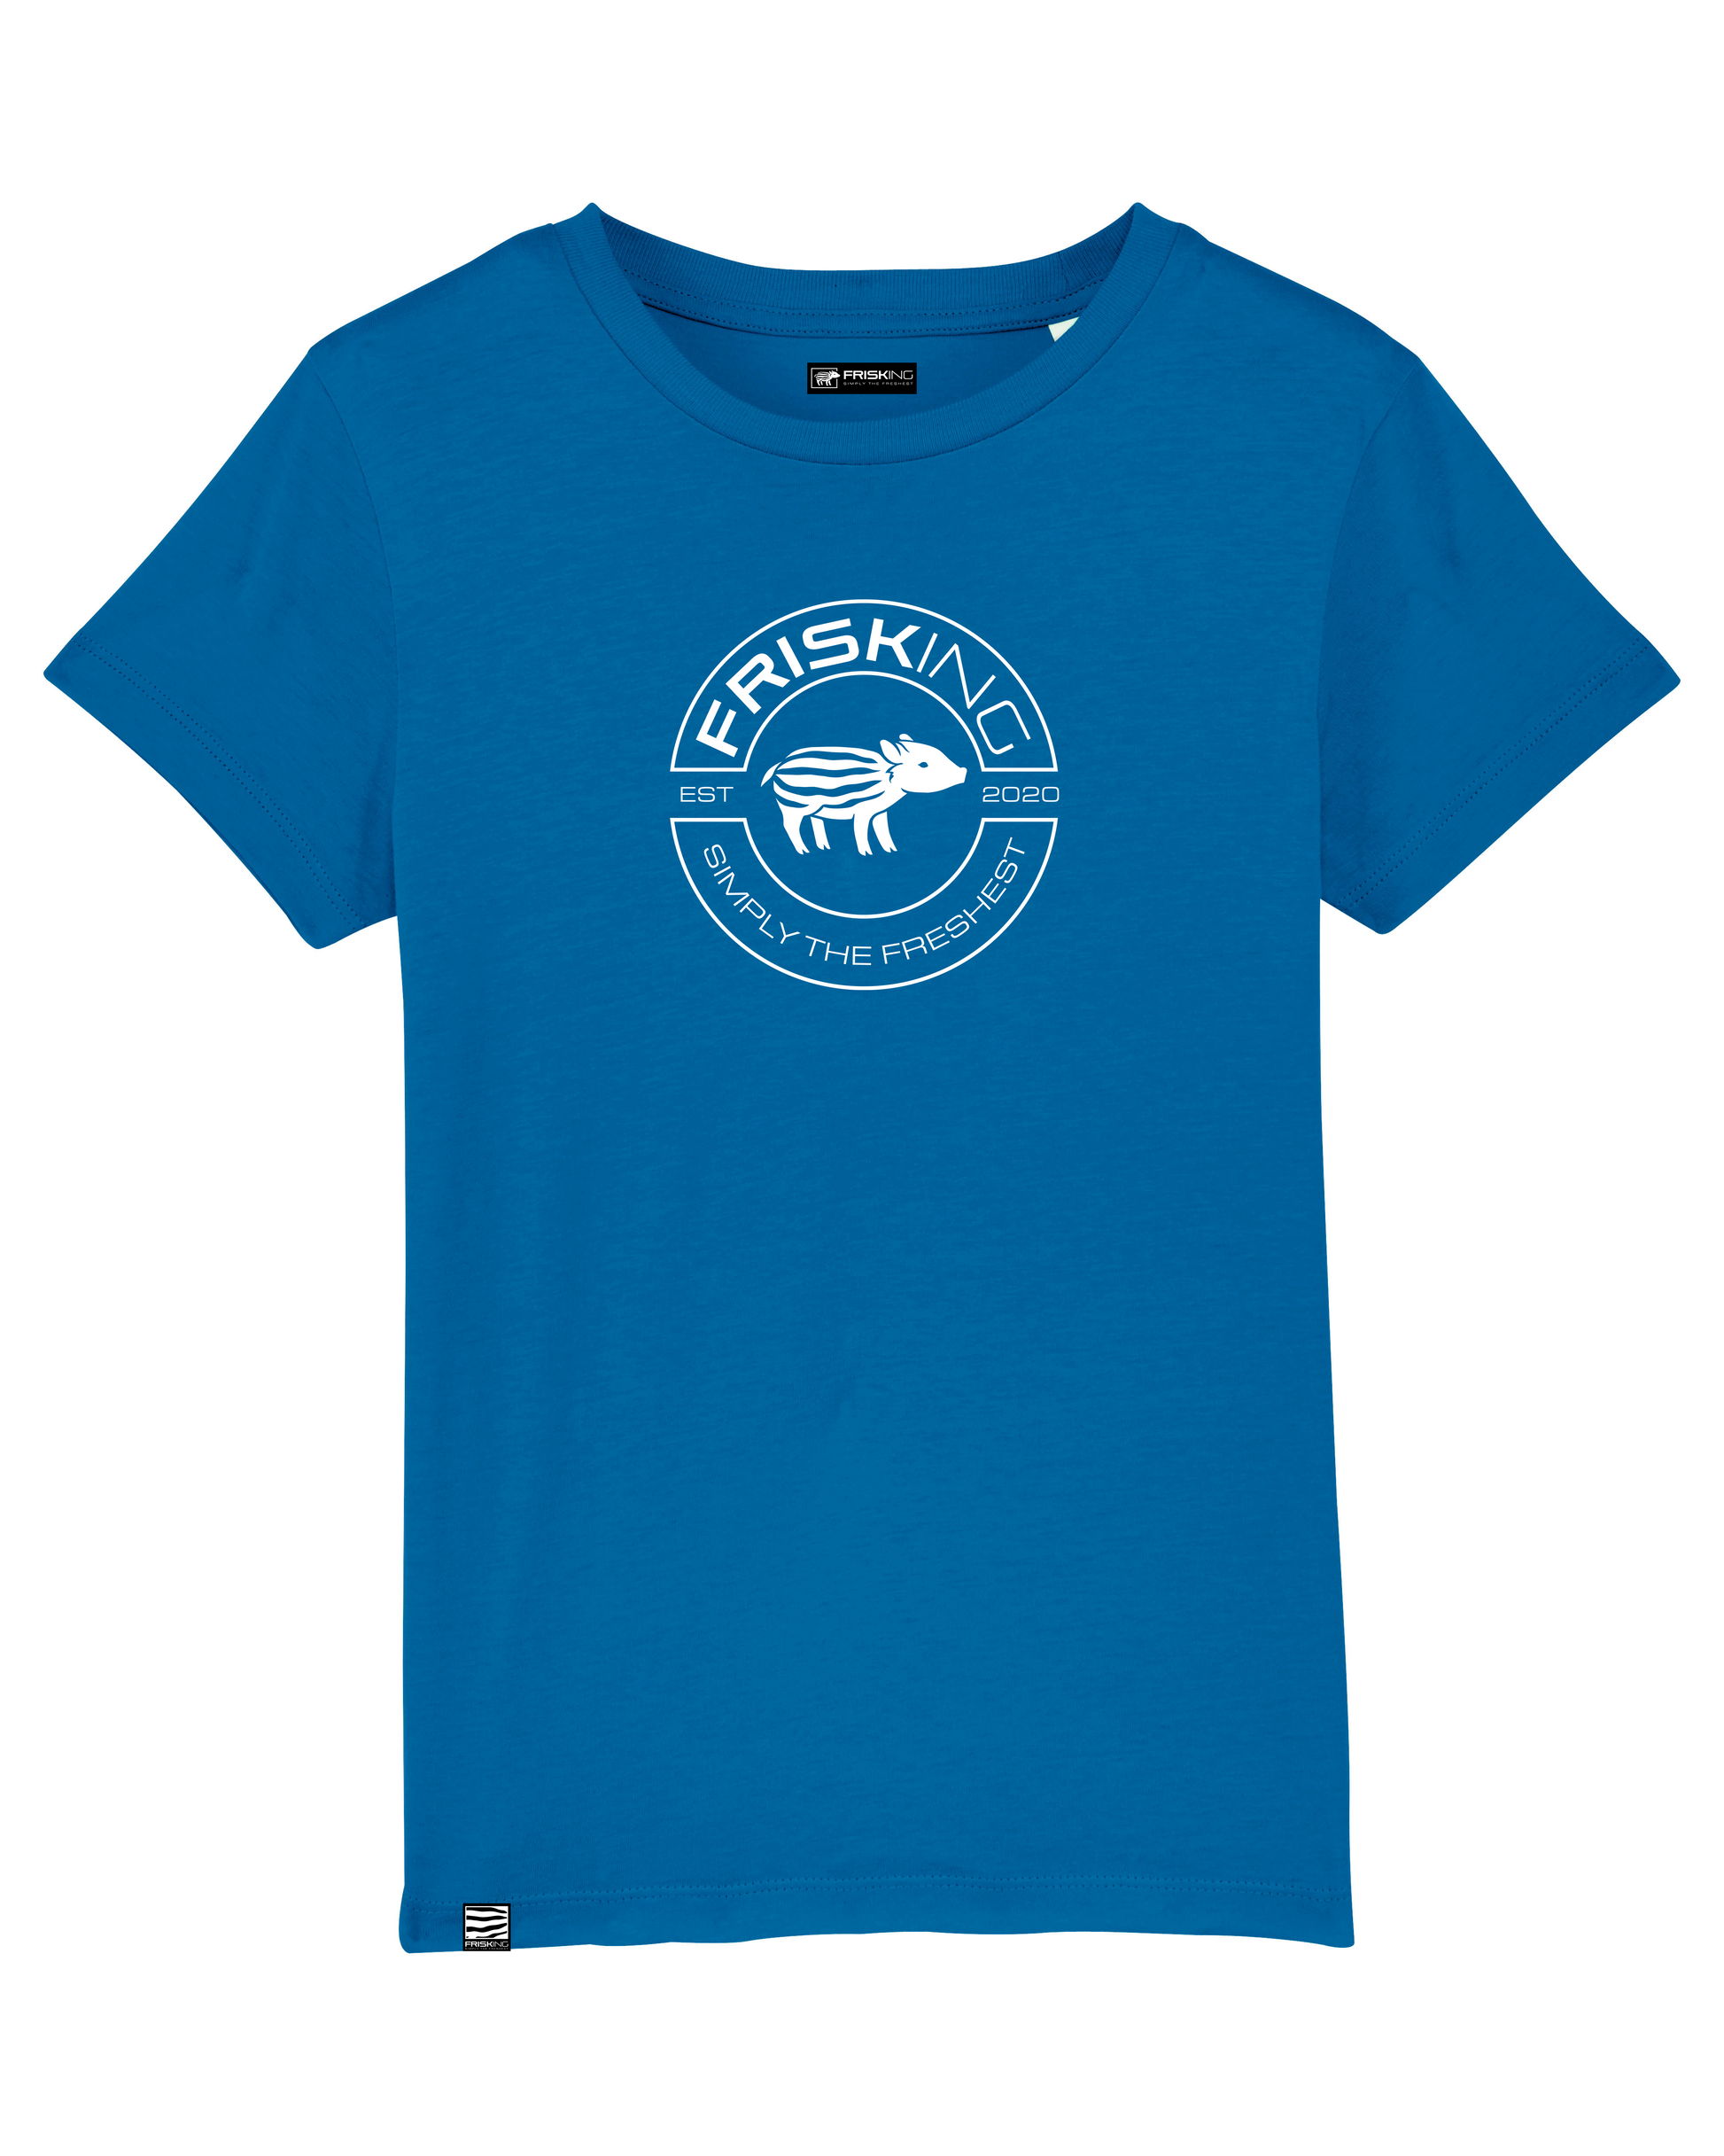 Kids - Unisex-T-Shirt "Frischling", Shirt, T Shirt, Kinder, simply the freshest